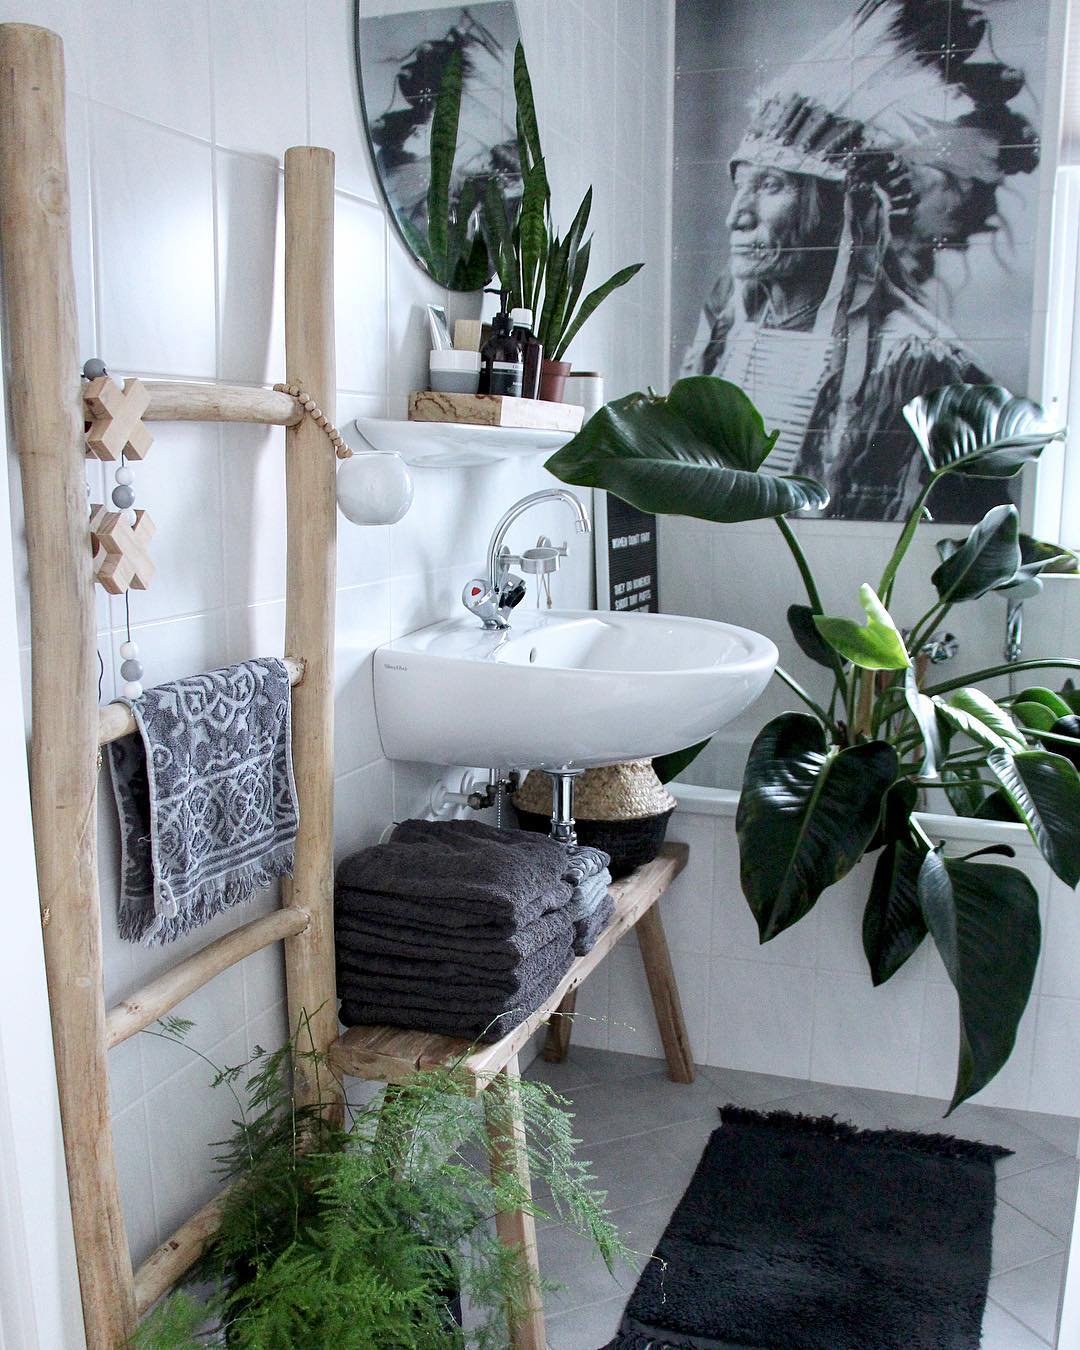 Bench with Towels Underneath Bathroom Sink. Photo by Instagram user @wonen_bij_chantal